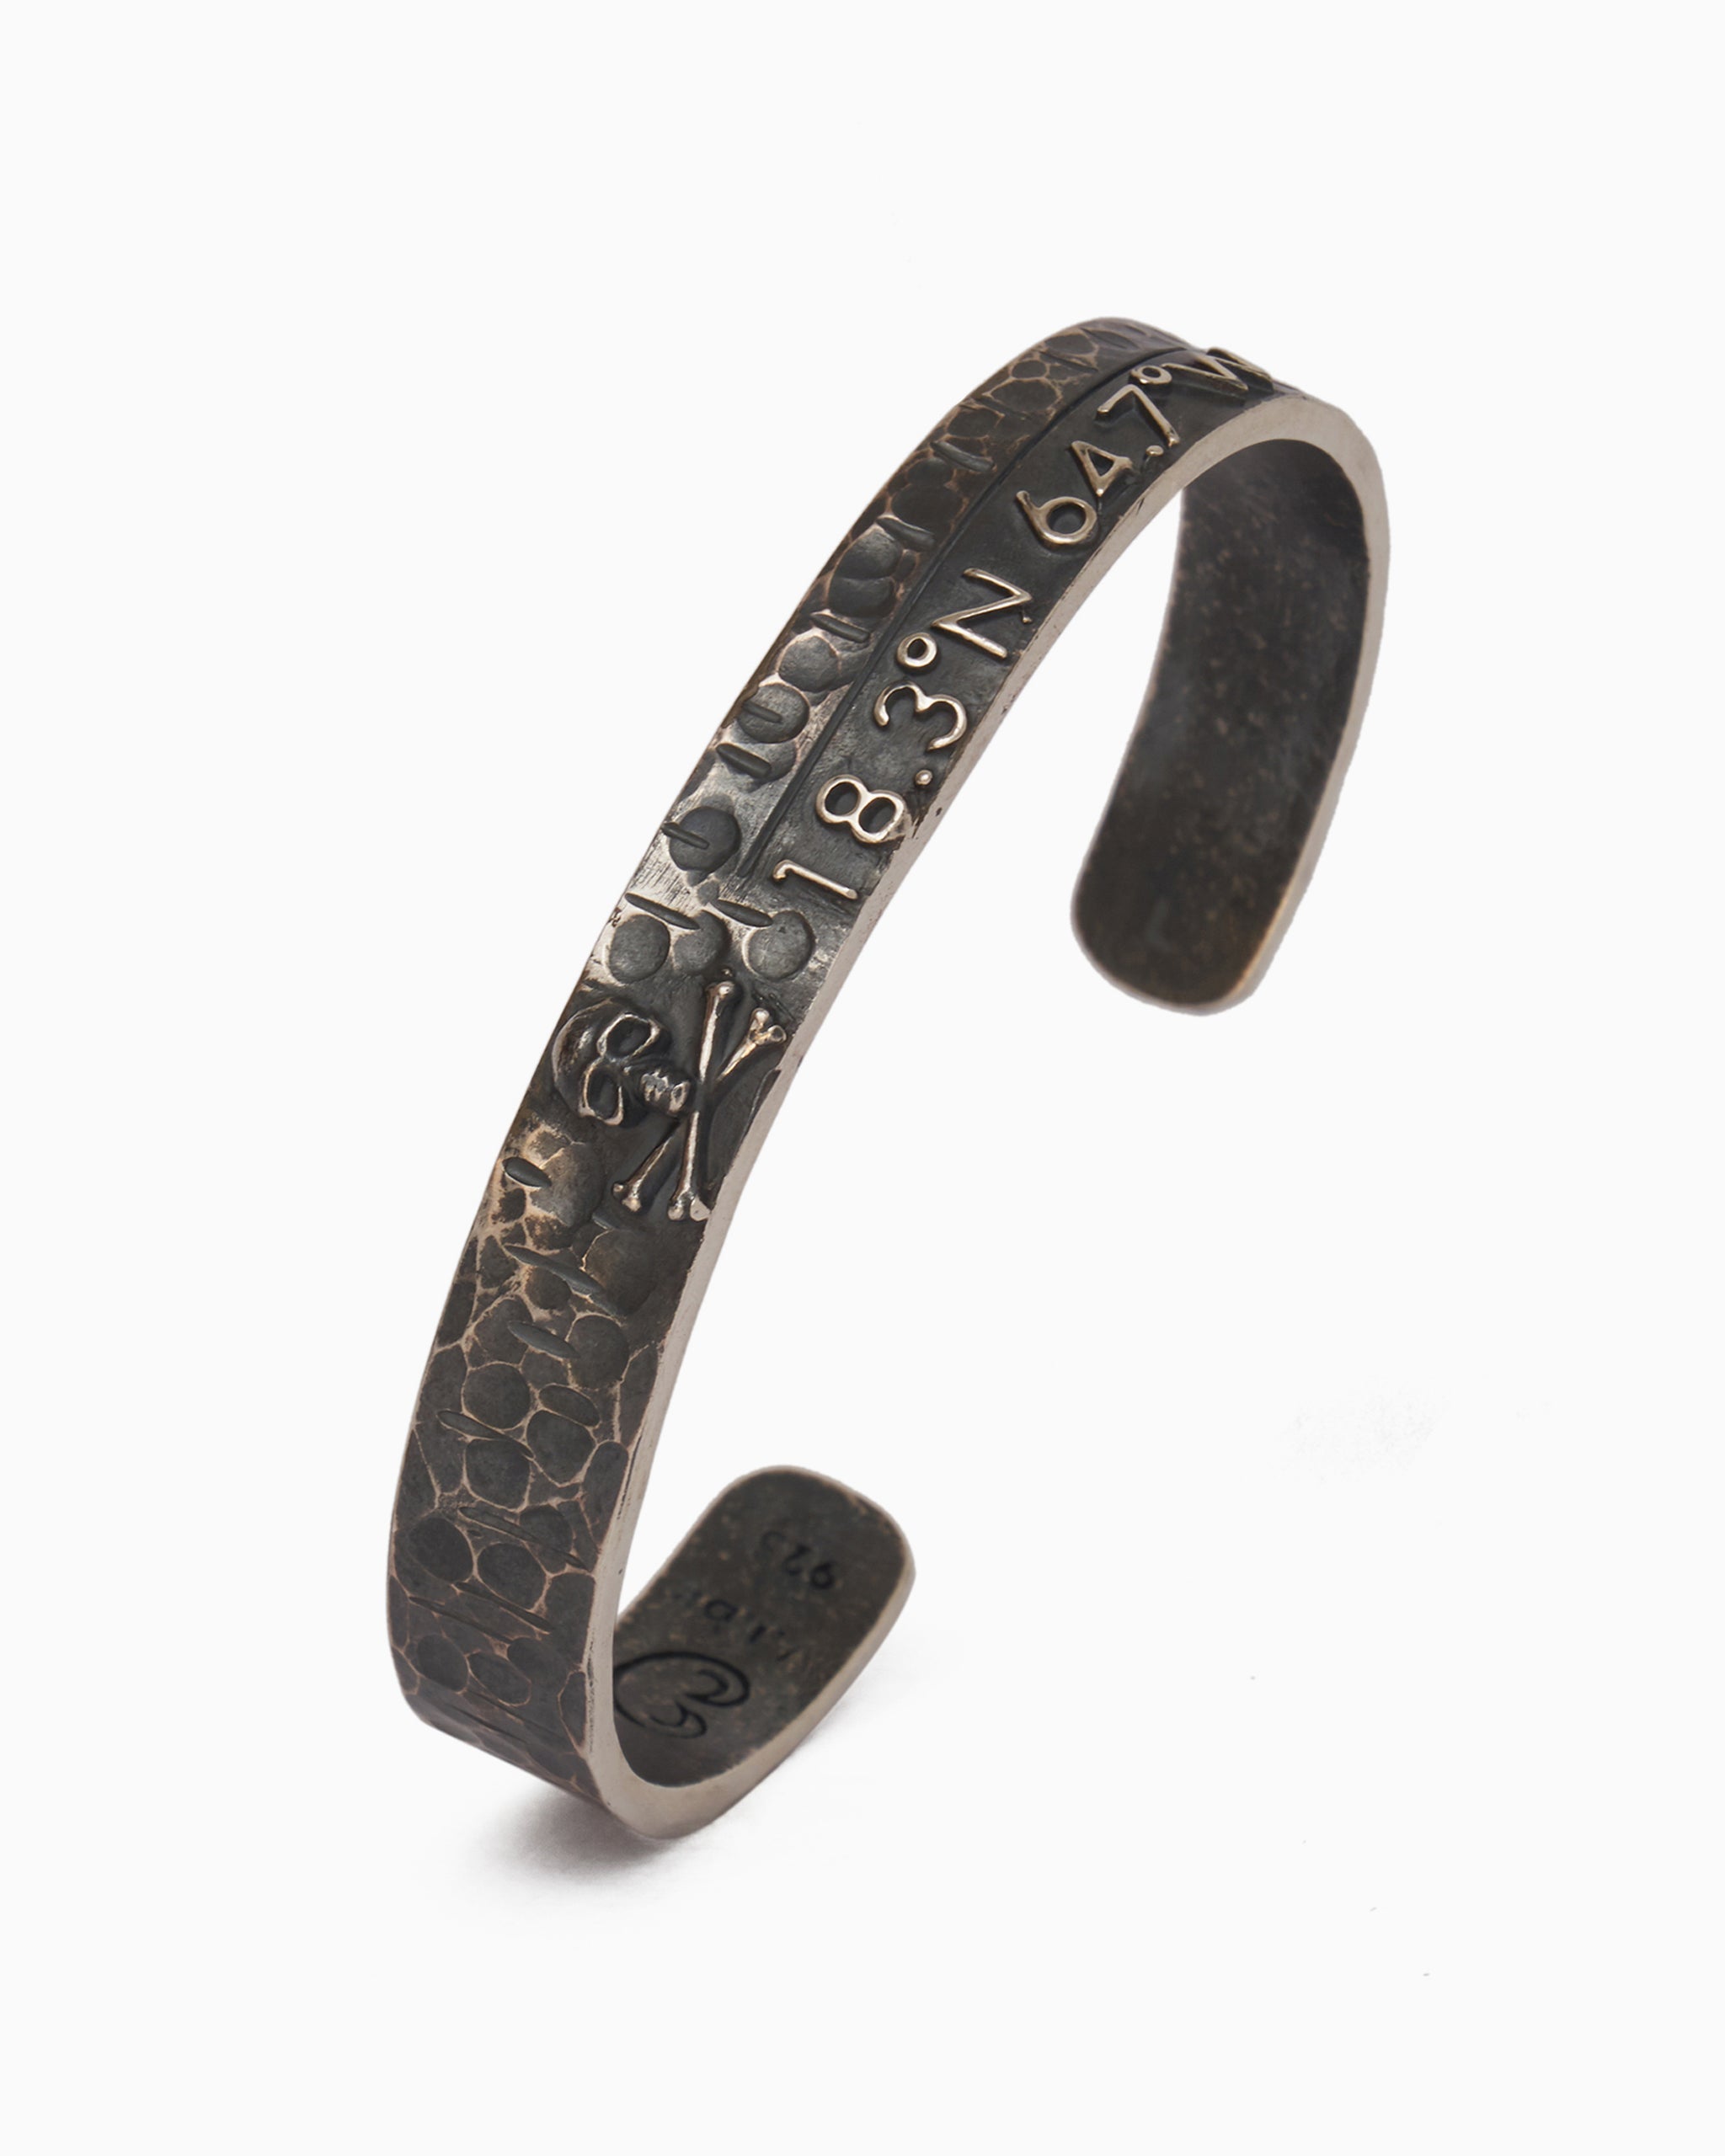 Pirate Texture Hook Bracelet with St. John Coordinates, 10mm - Vibe Jewelry